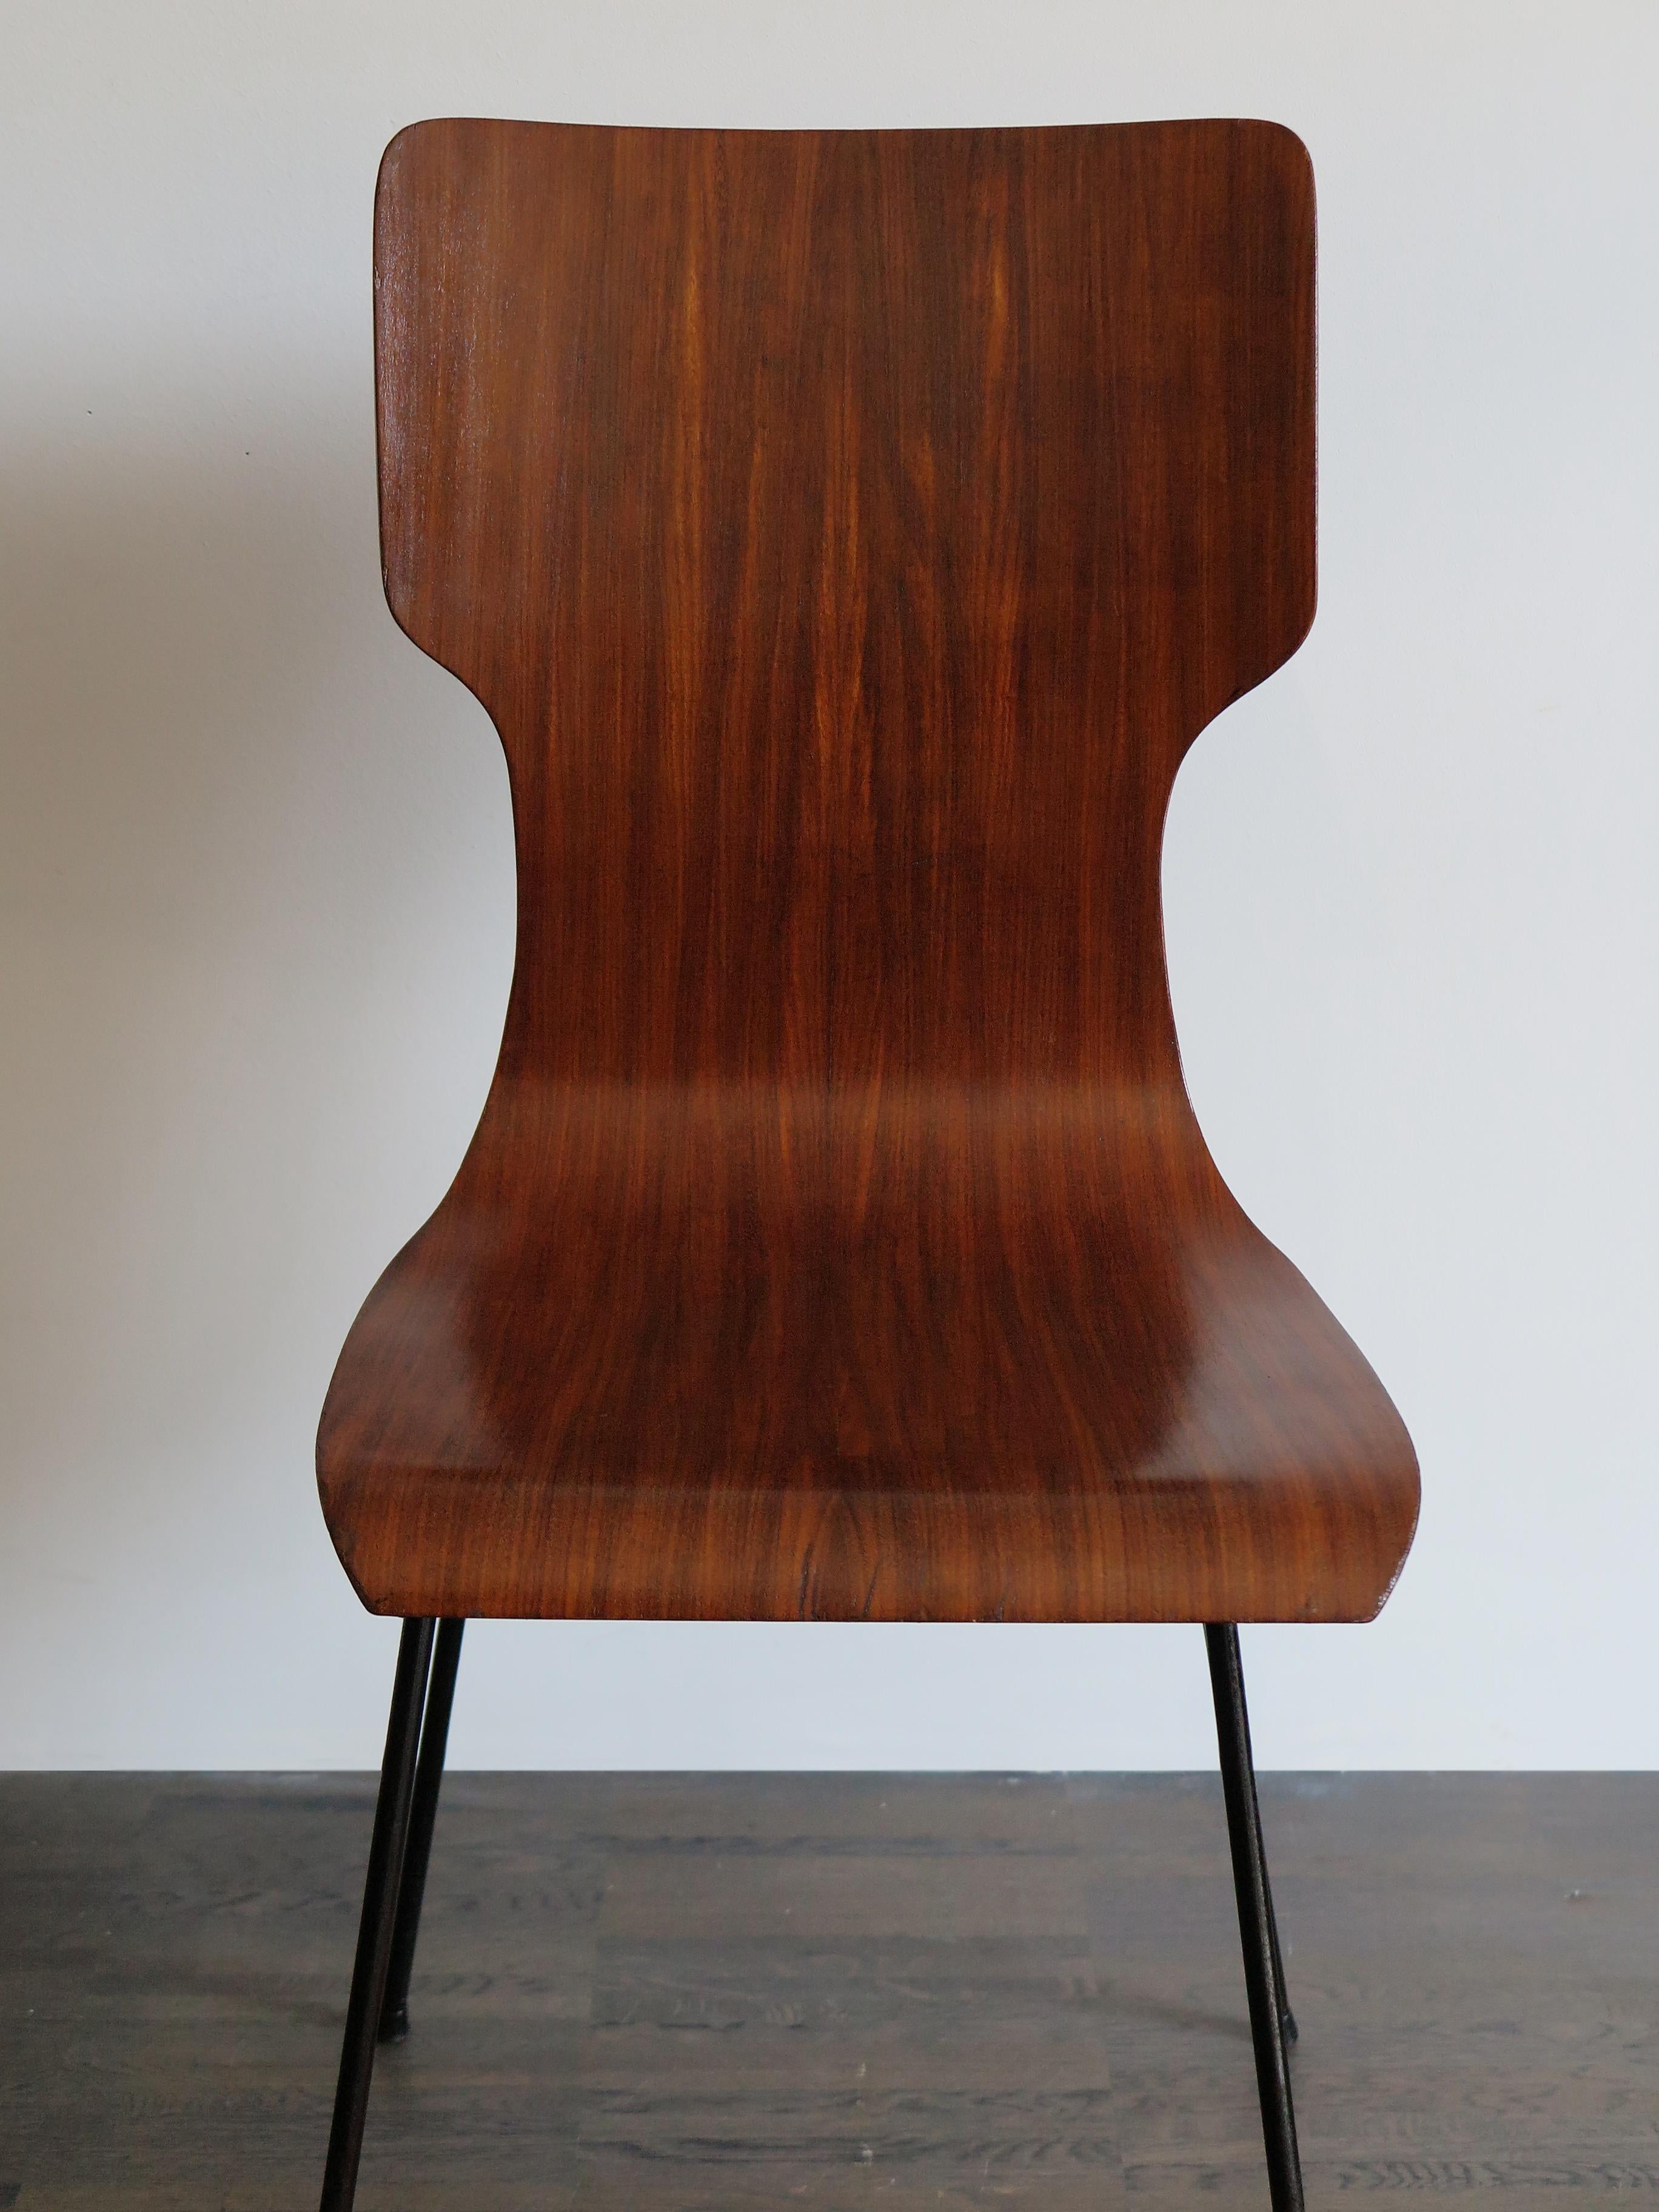 1950s Carlo Ratti Italian Midcentury Modern Design Dining Chairs 1